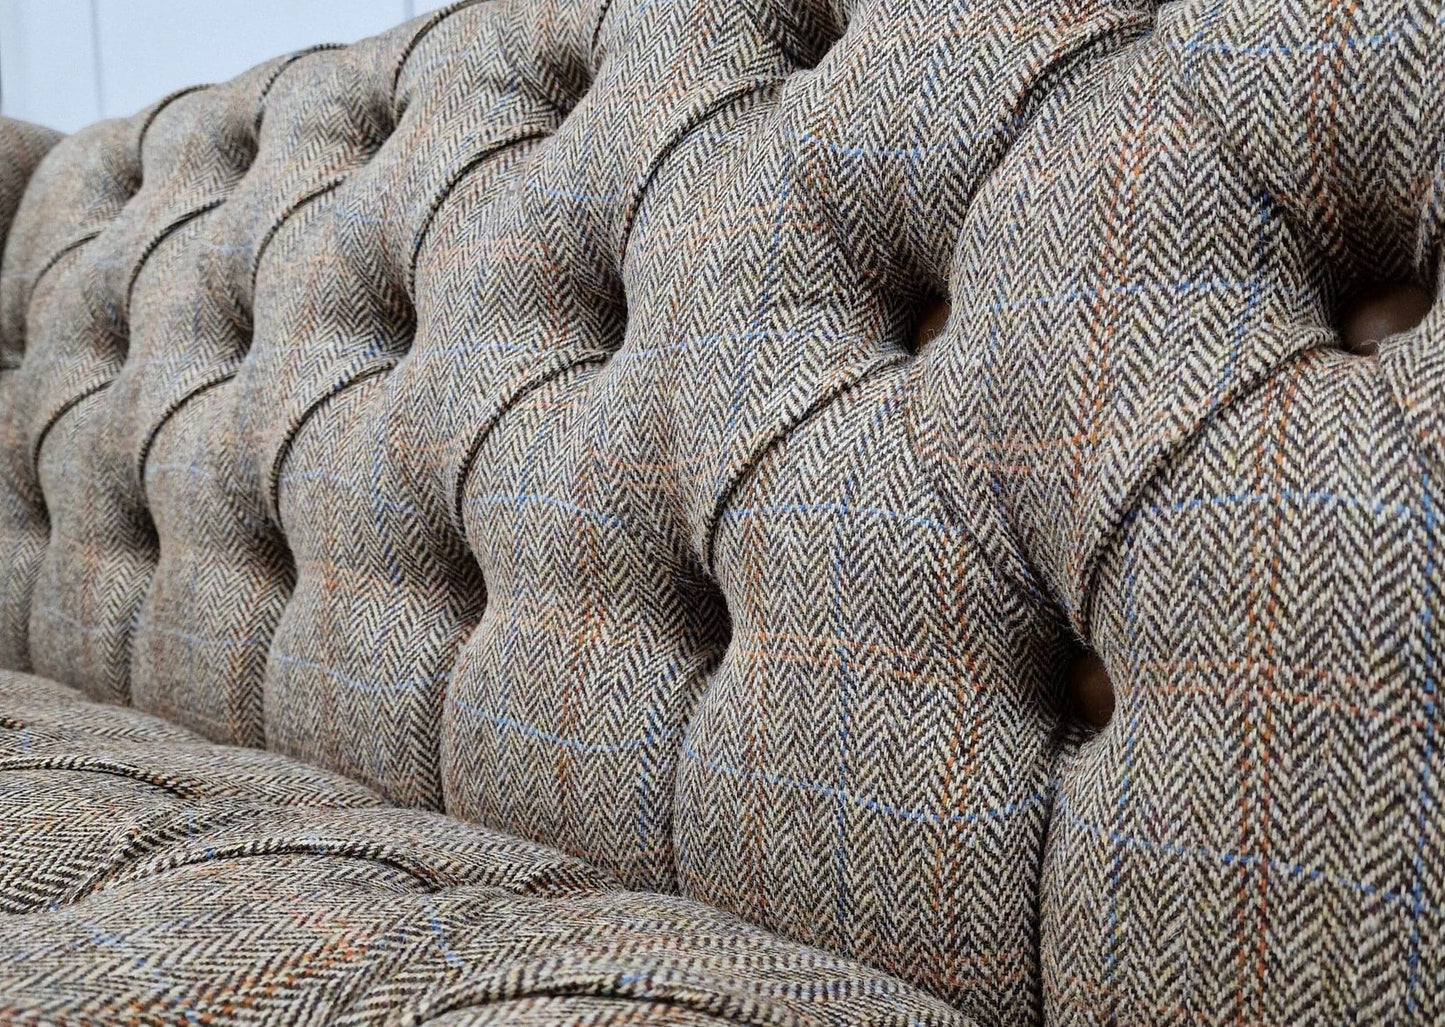 Autumn Woodland Harris Tweed 2 Seater Chesterfield Sofa - Oban - Sofas - Rydan Interiors